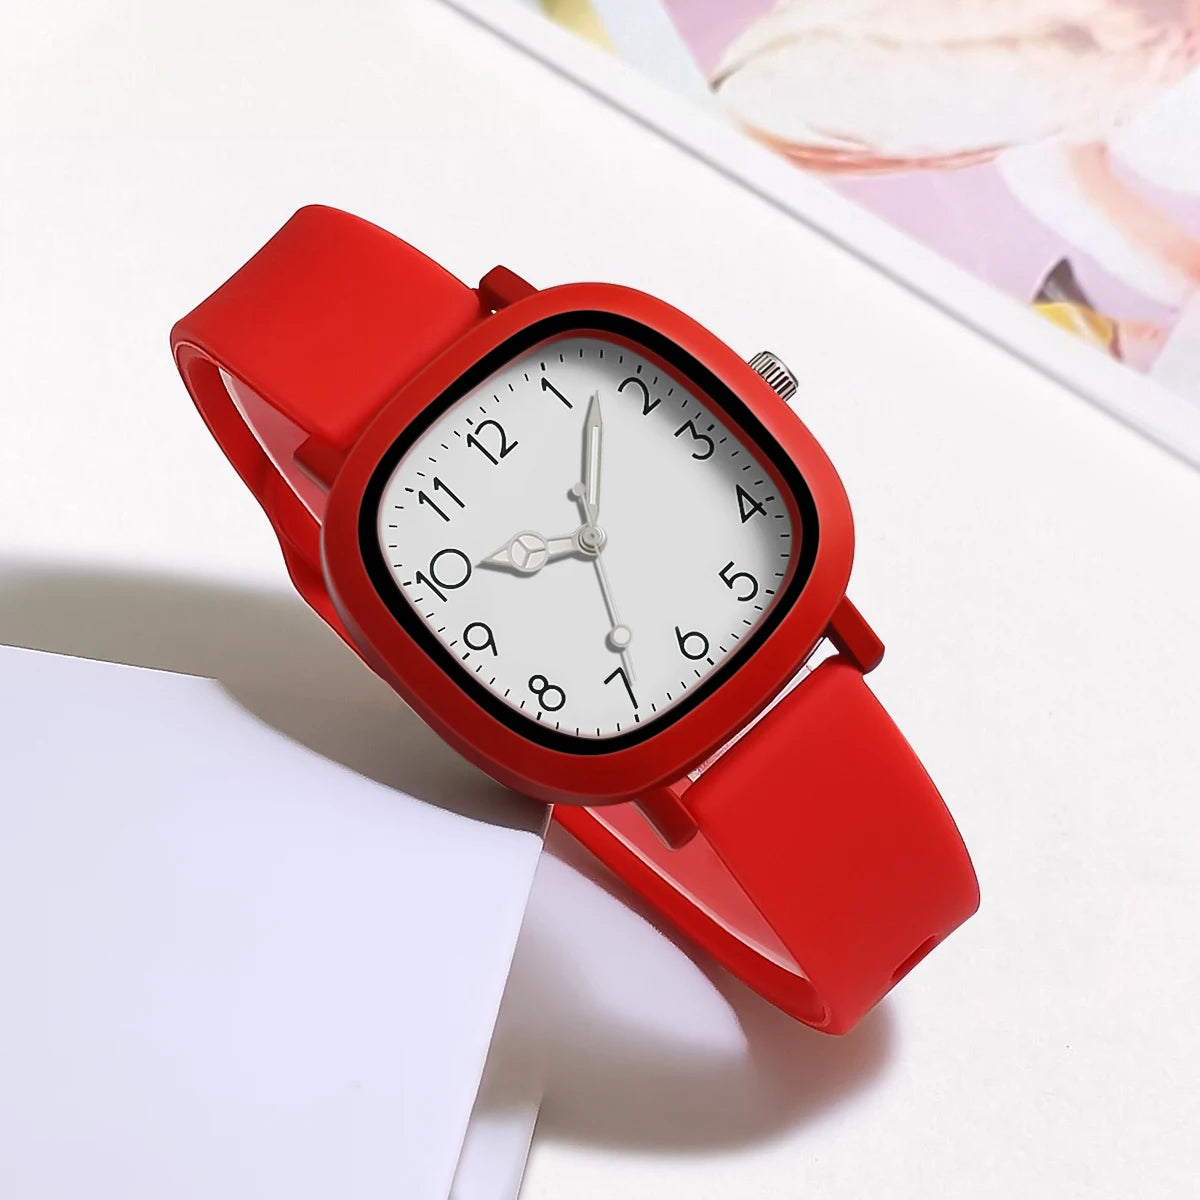 Fashion Women Watch Silicone Quartz Wristwatches for Women Clock Christmas Gift Valentine'S Day Ladies Watches Reloj Mujer